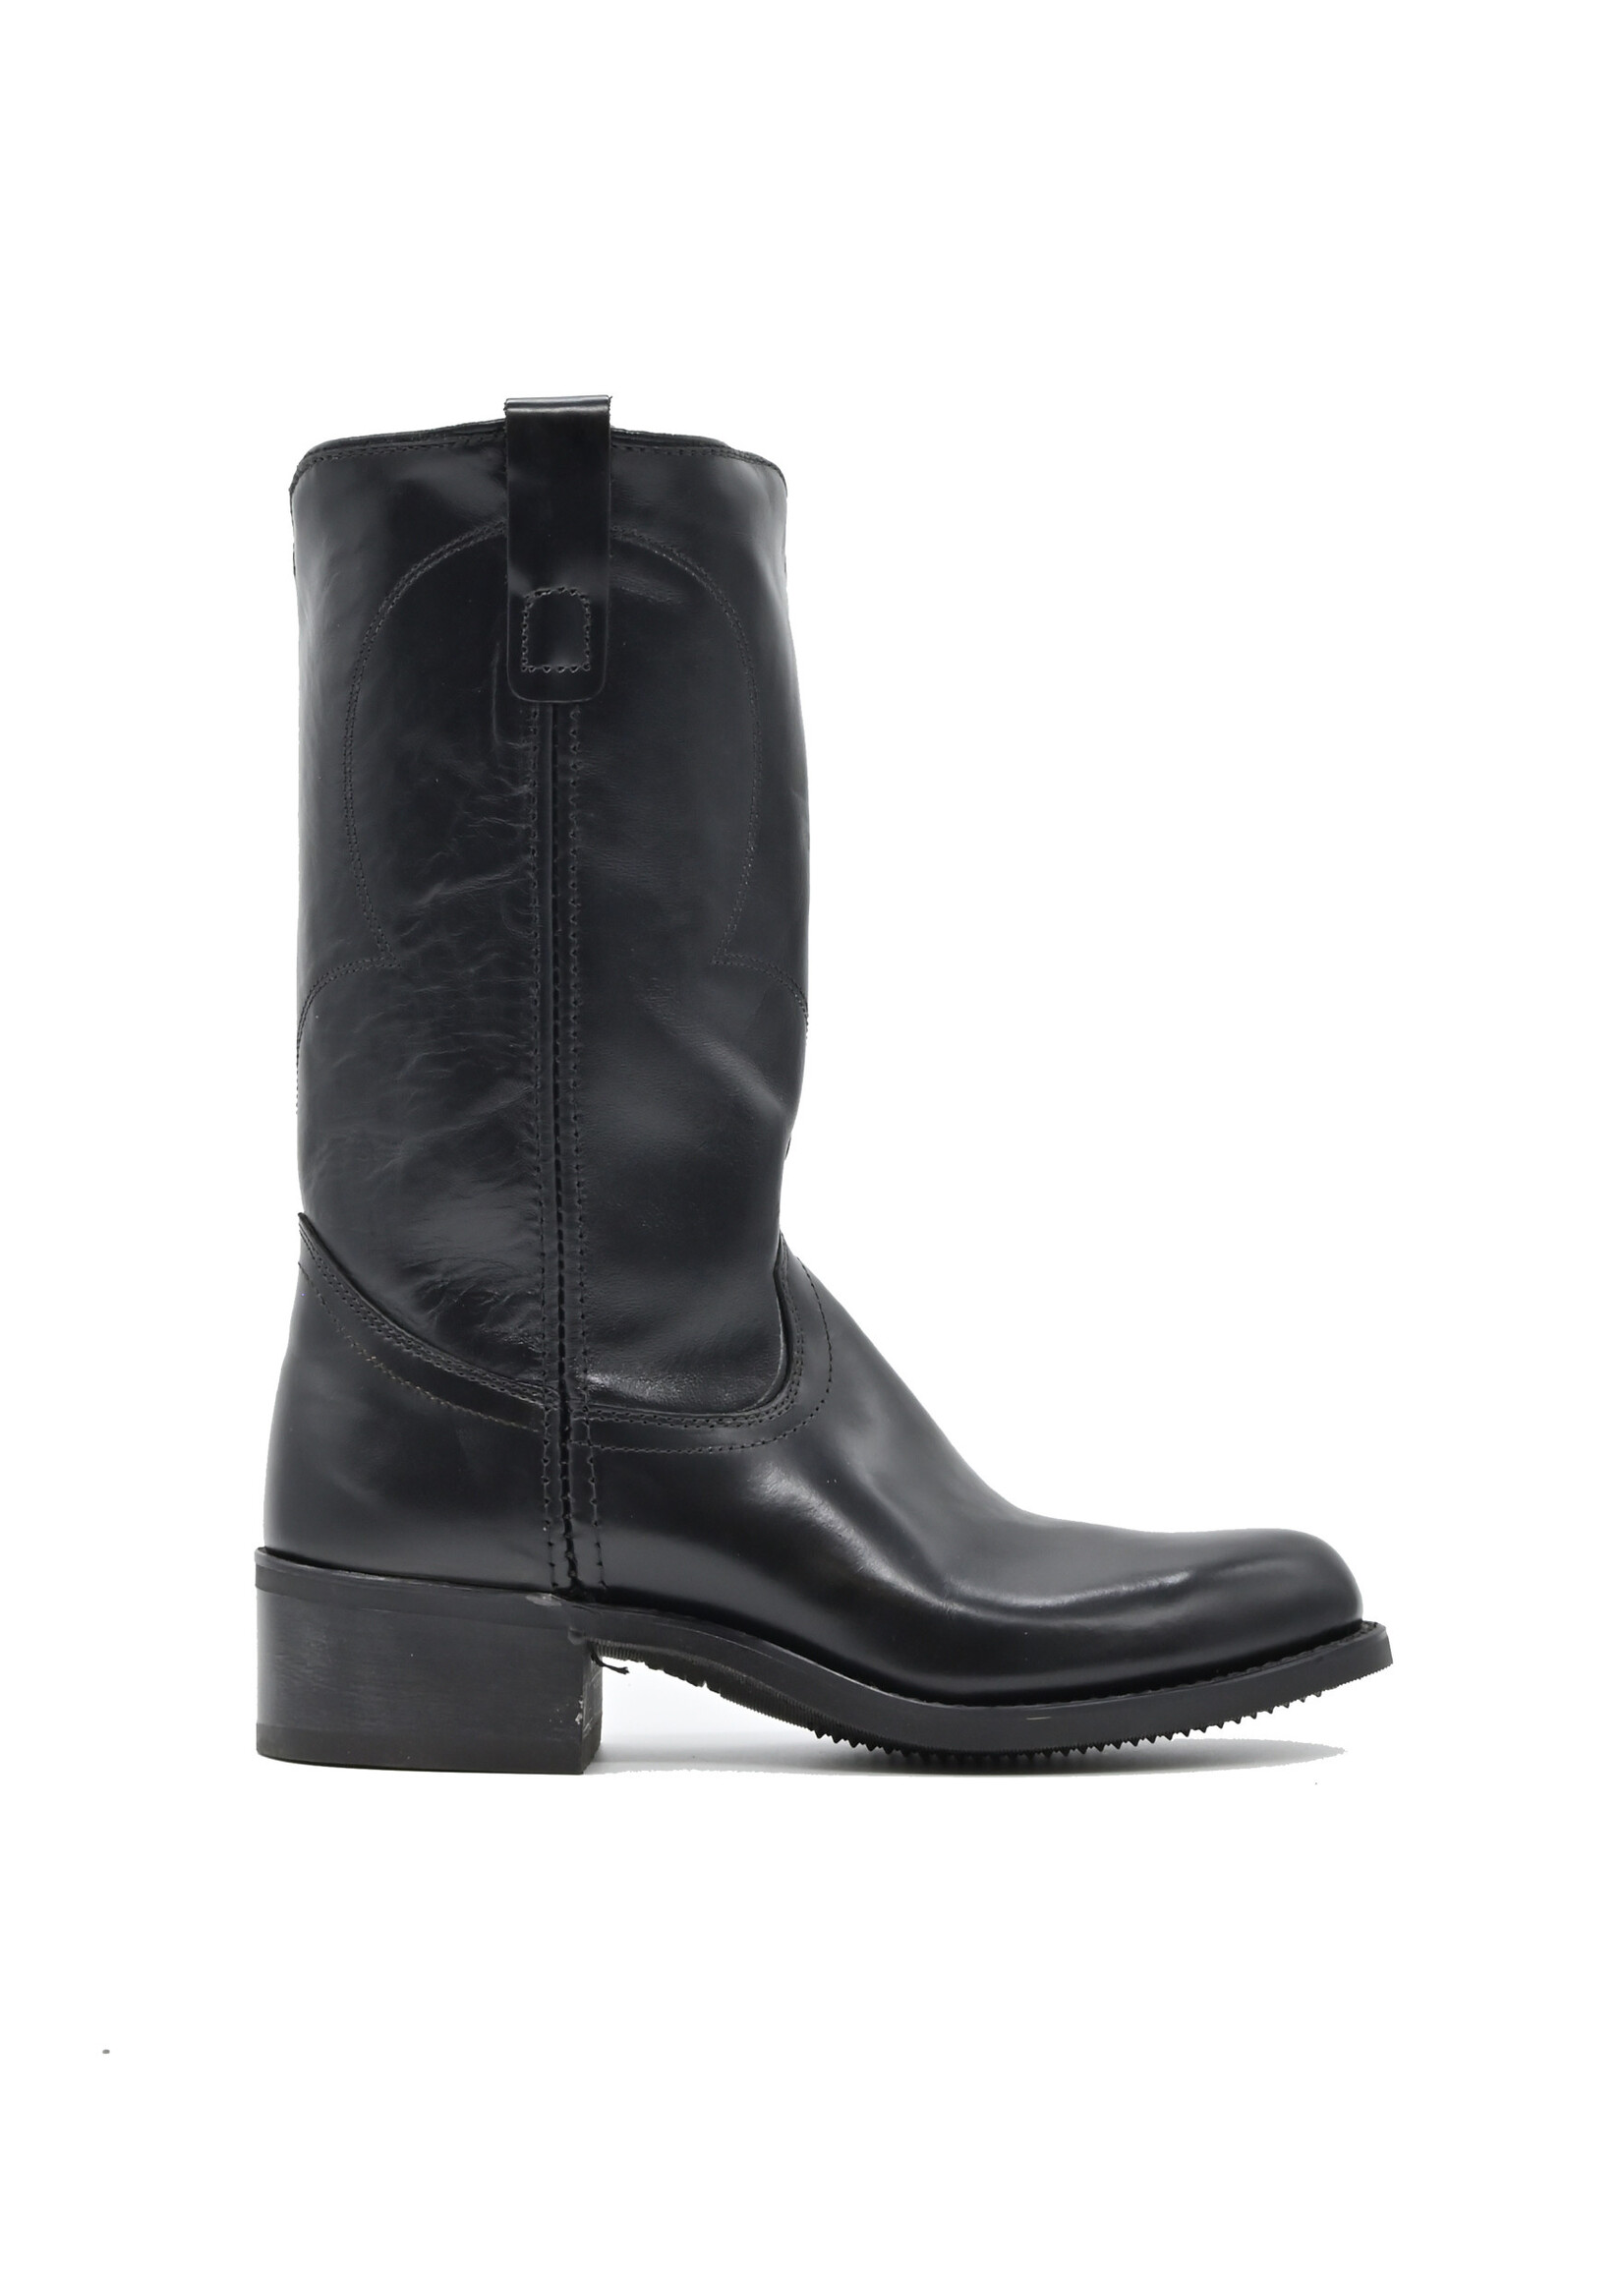 Texas 8300 - Black Boot (Size 7D)